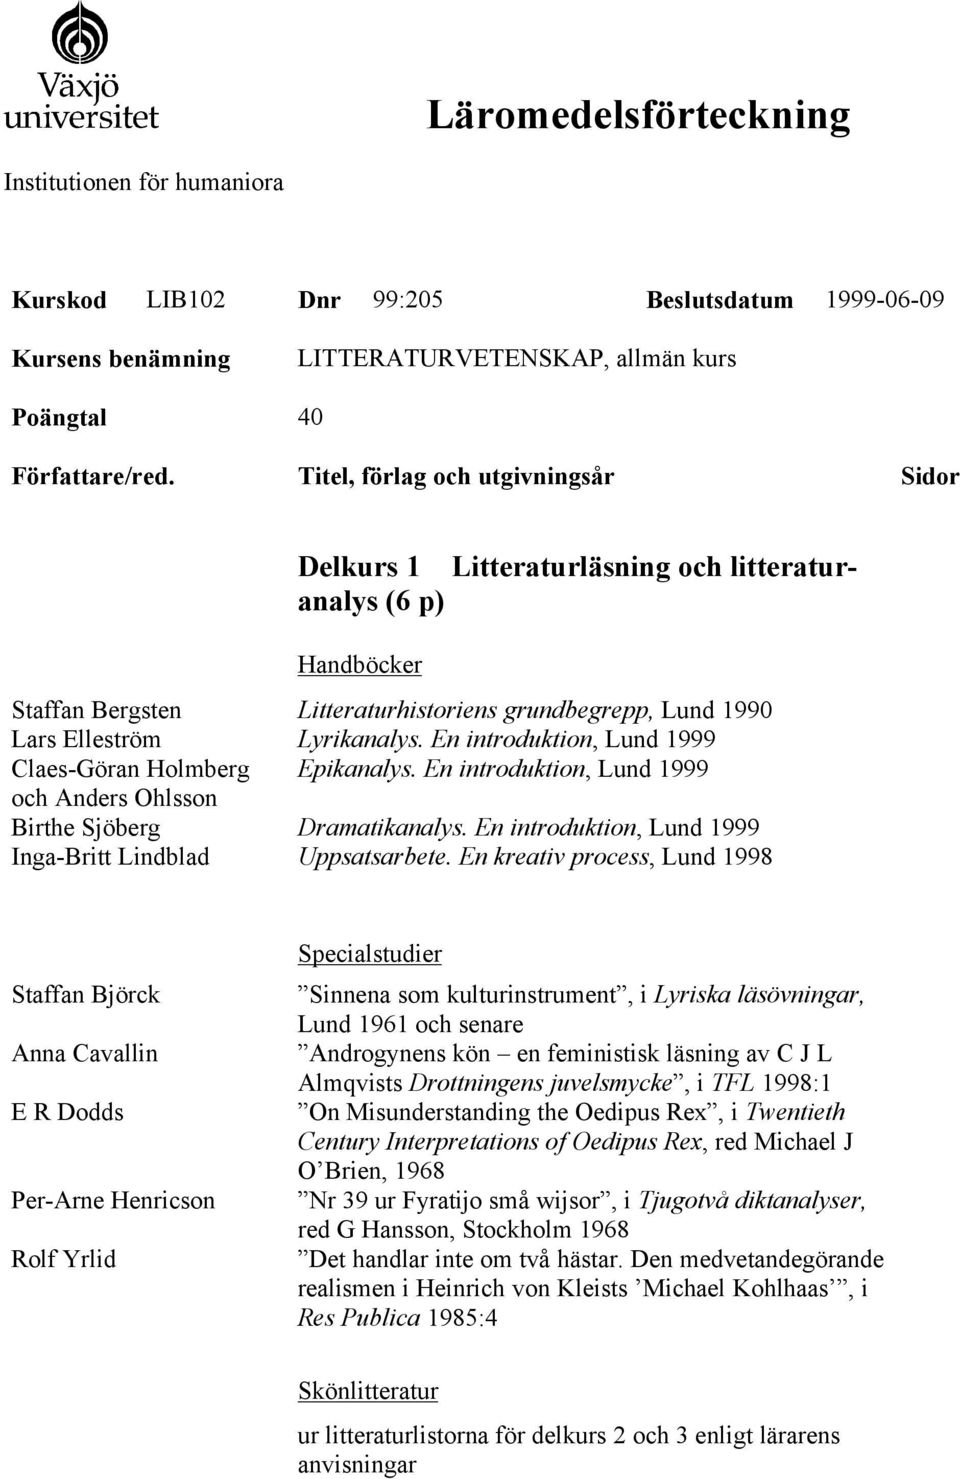 En introduktion, Lund 1999 Claes-Göran Holmberg Epikanalys. En introduktion, Lund 1999 och Anders Ohlsson Birthe Sjöberg Dramatikanalys. En introduktion, Lund 1999 Inga-Britt Lindblad Uppsatsarbete.